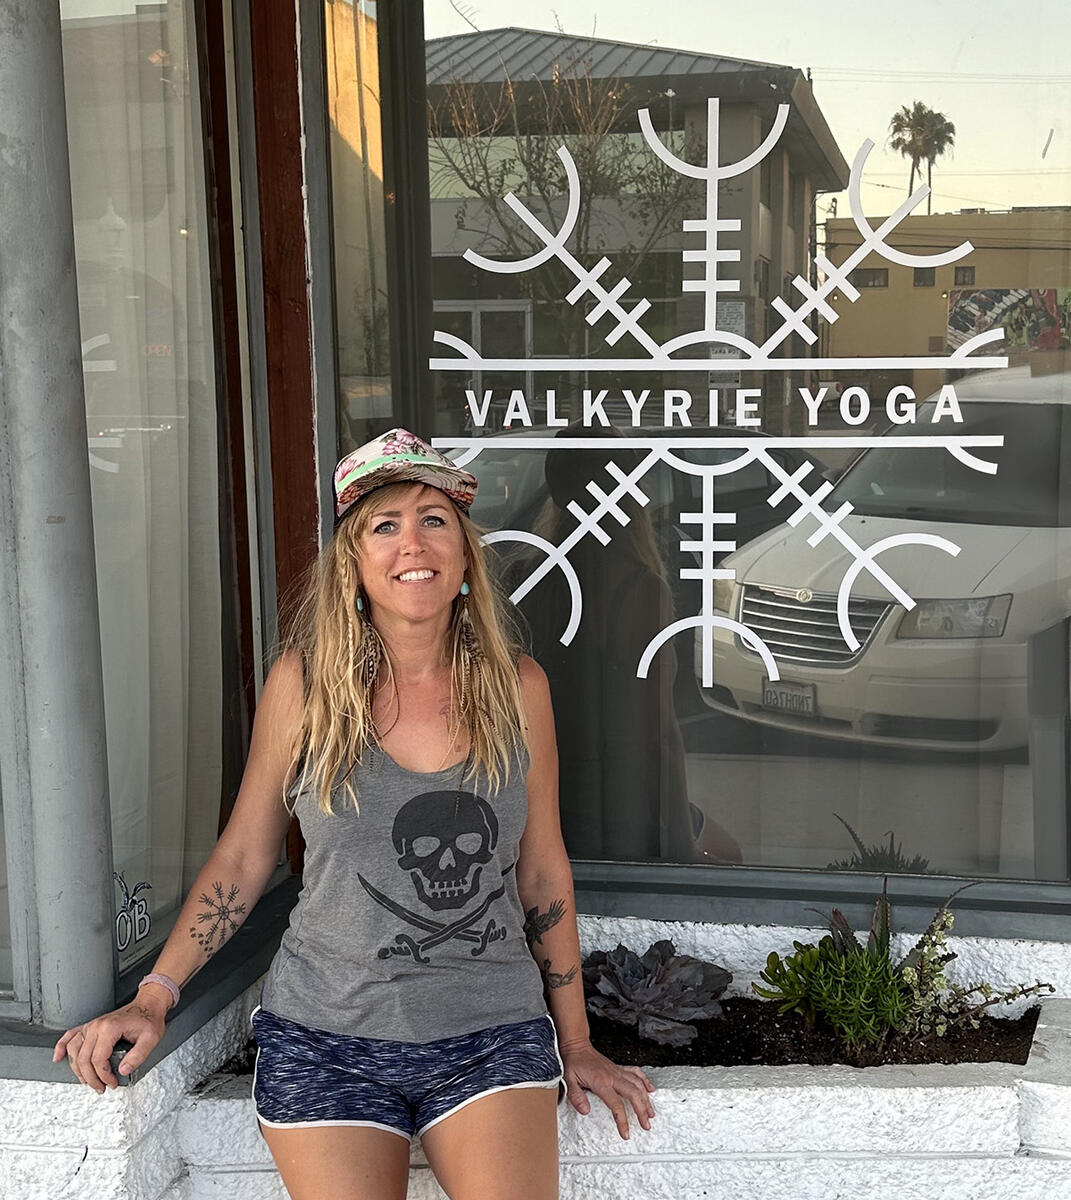 Valkyrie Yoga Owner, Agnete